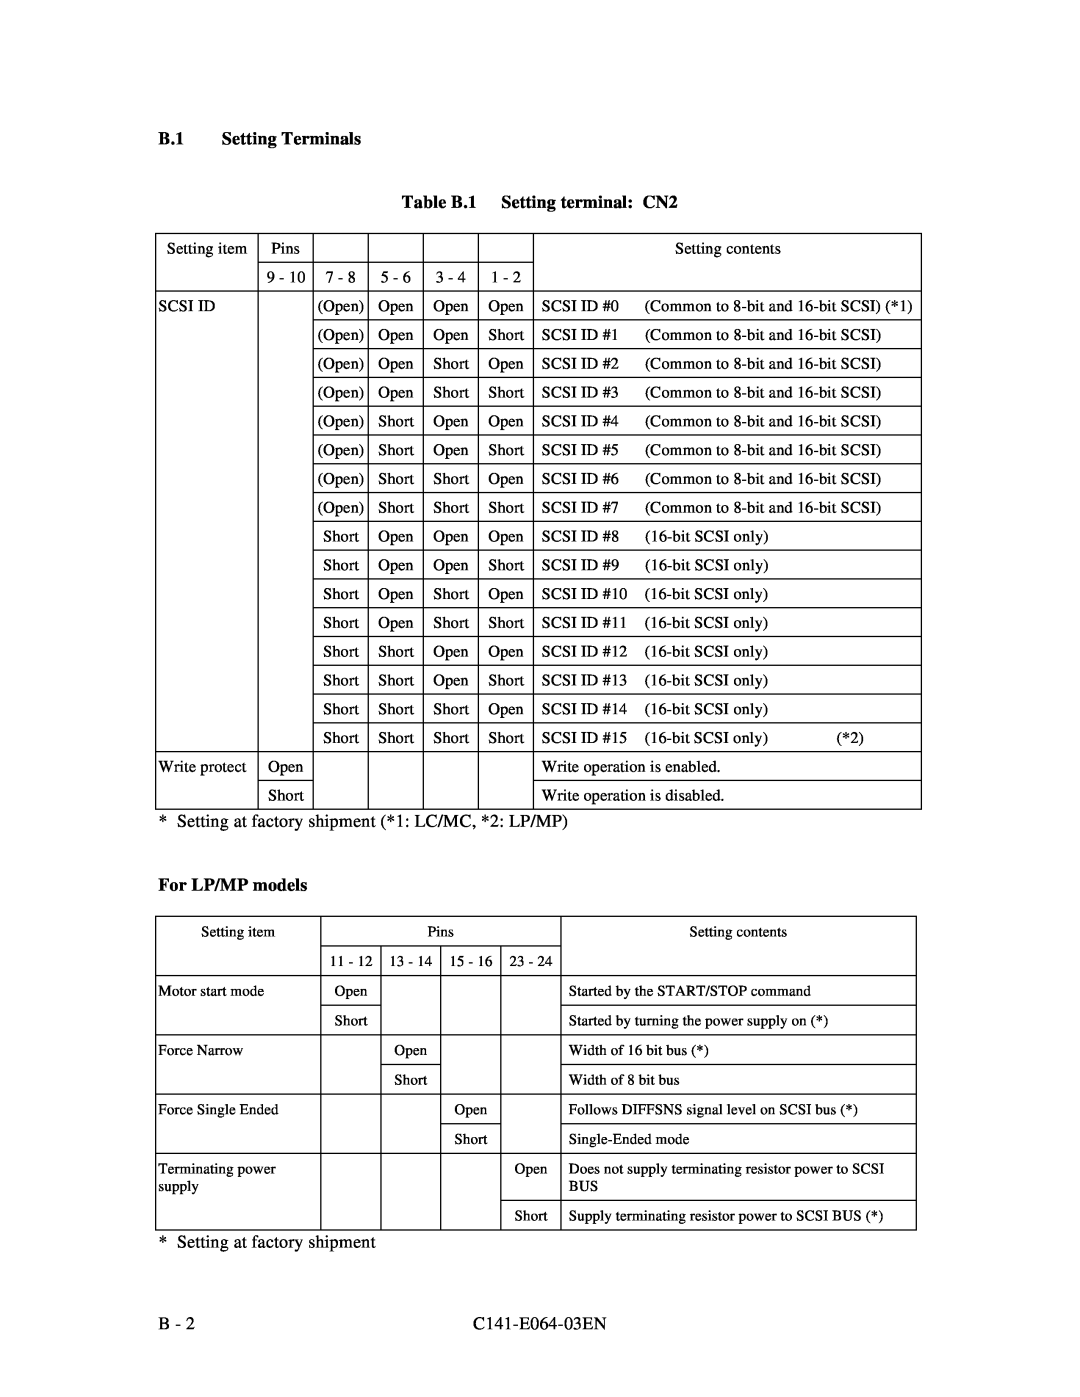 Fujitsu MAE3091LC manual Setting Terminals, Table B.1 Setting terminal CN2, For LP/MP models, Setting at factory shipment 